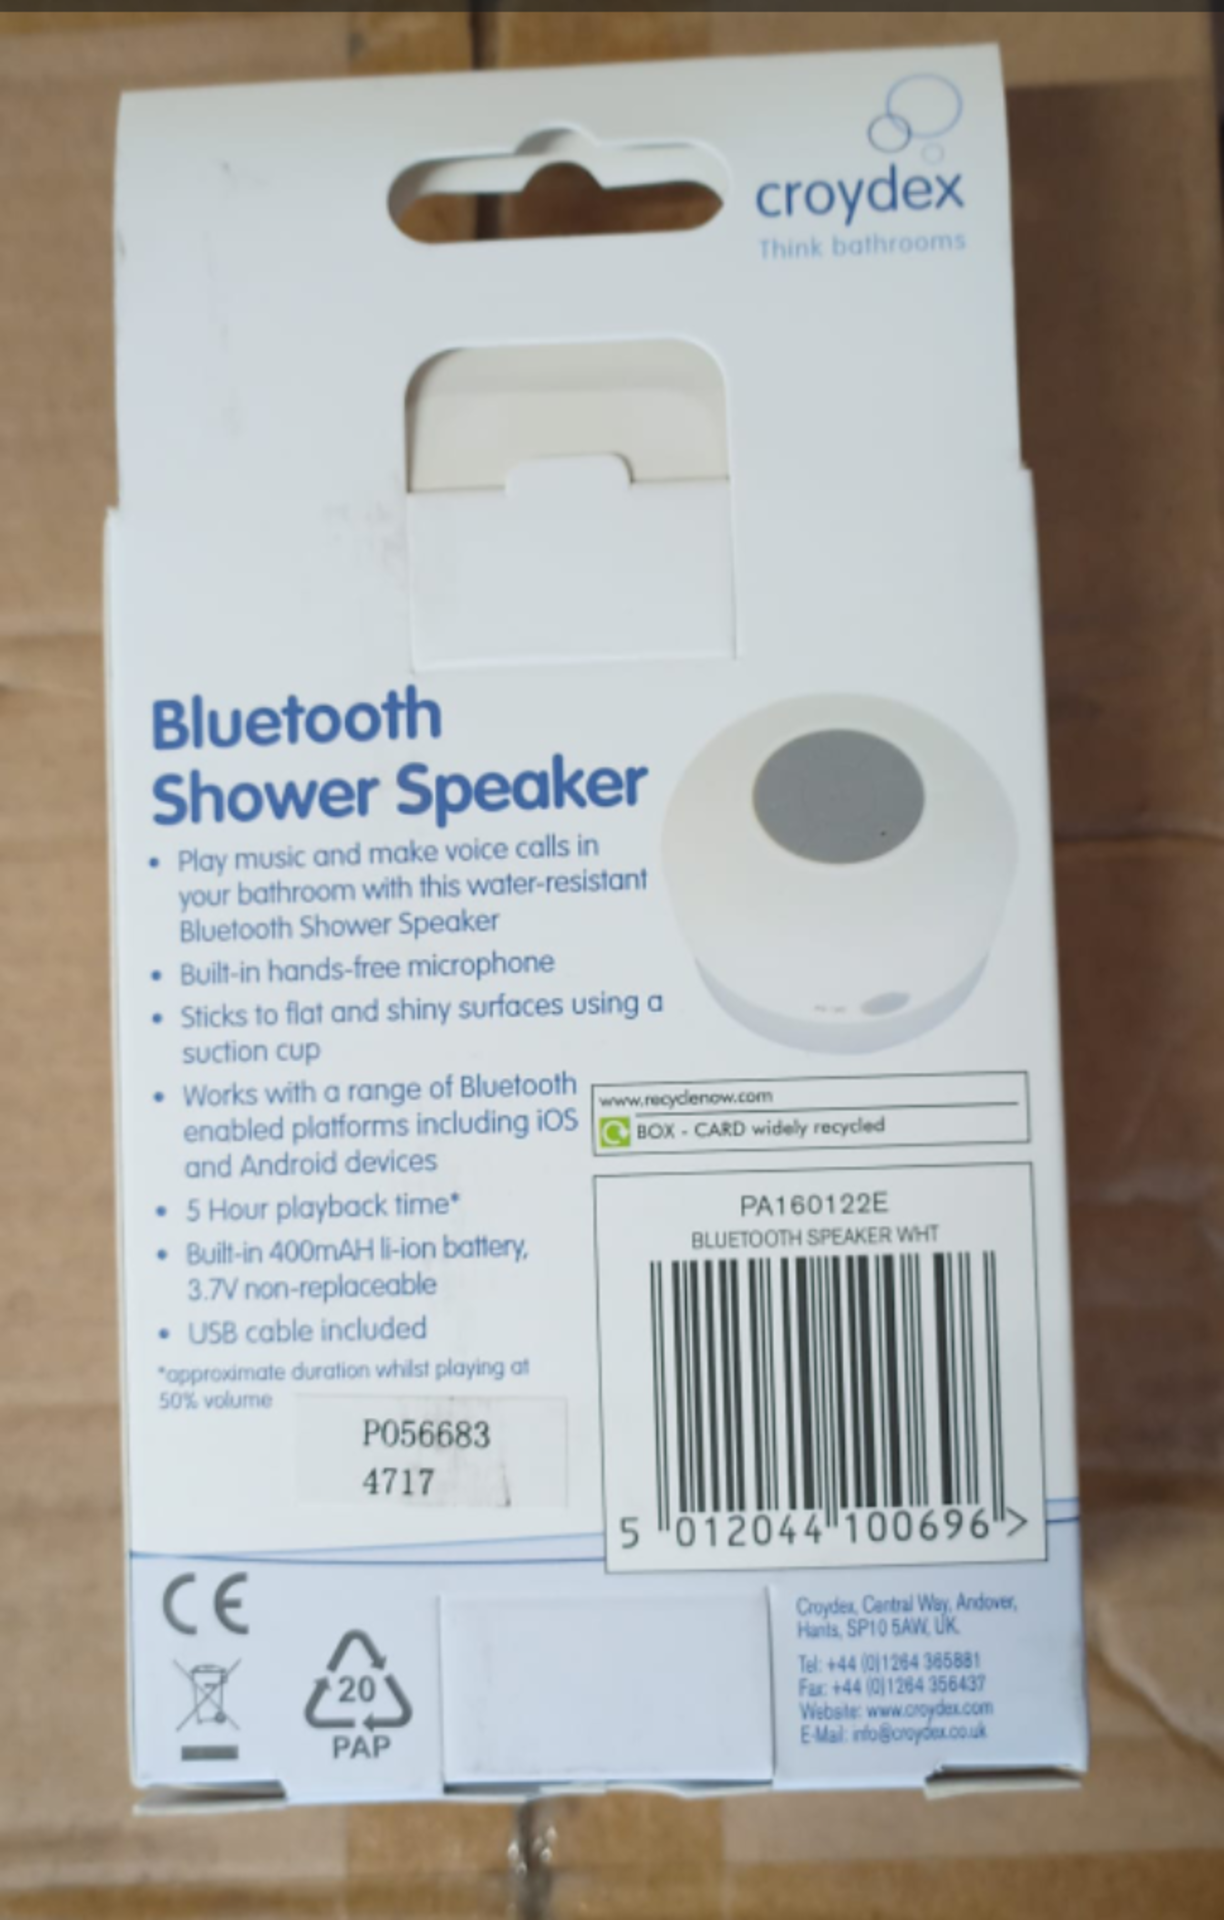 100 x BRAND NEW AND SEALED Croydex Bluetooth shower speaker *PLUS VAT* - Image 2 of 3